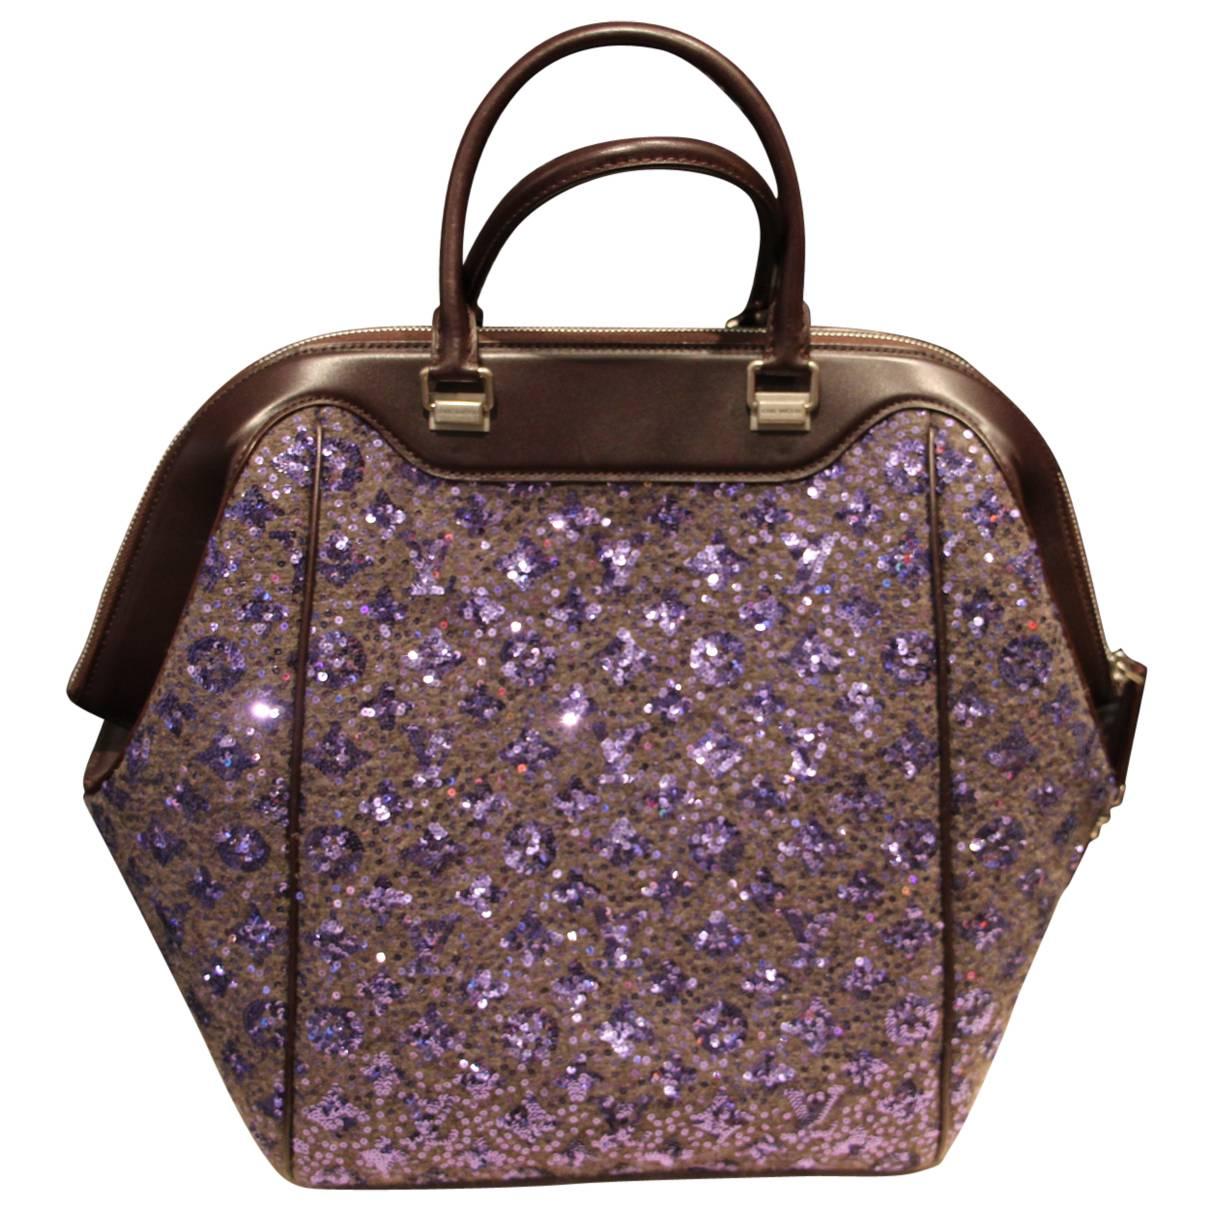 Louis Vuitton Limited Edition "North South" Sunshine Express Purple Bag